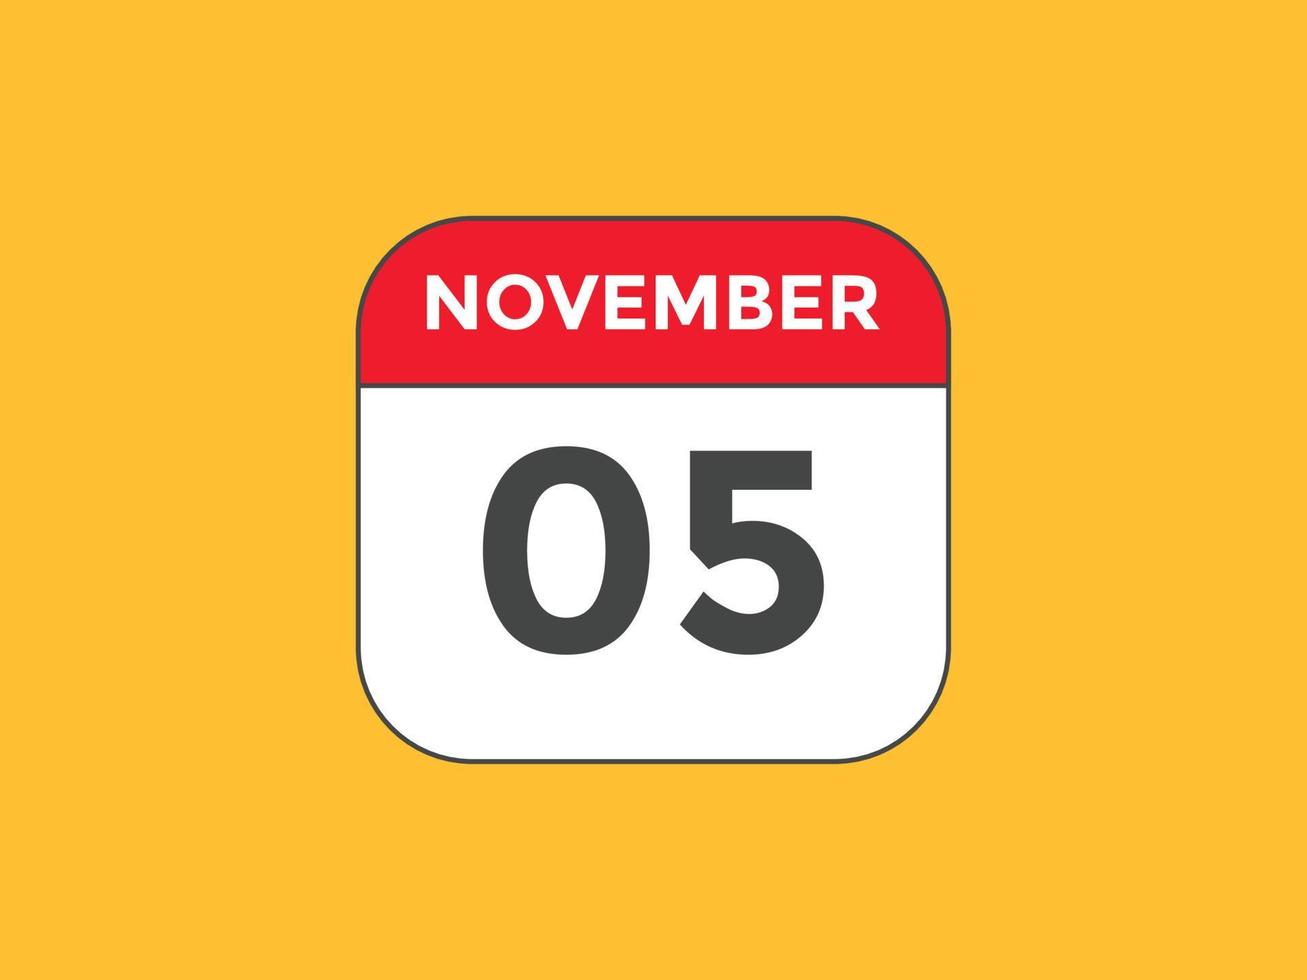 november 5 calendar reminder. 5th november daily calendar icon template. Calendar 5th november icon Design template. Vector illustration